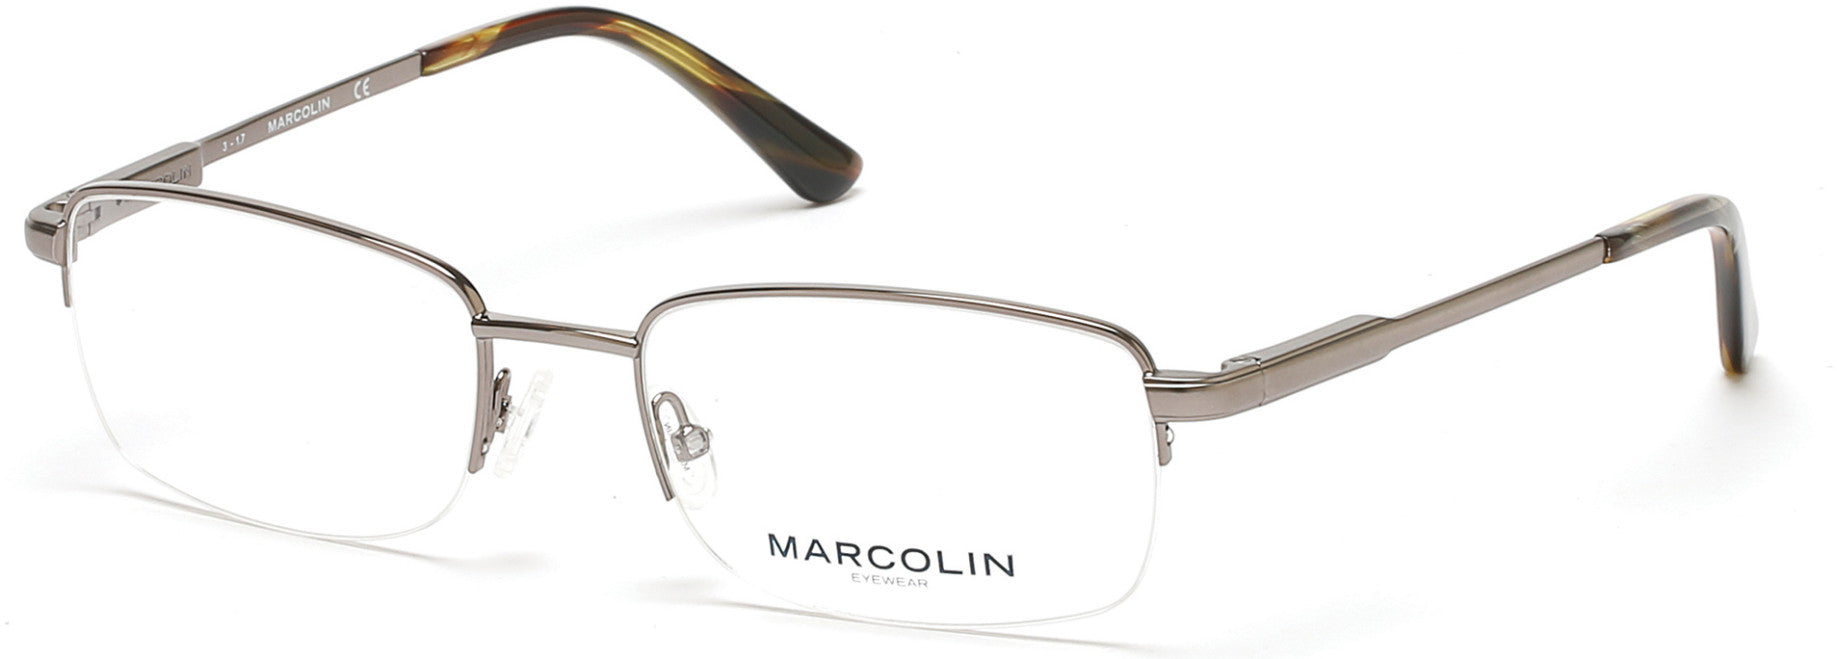 Marcolin MA3002 Eyeglasses 008-008 - Shiny Gunmetal